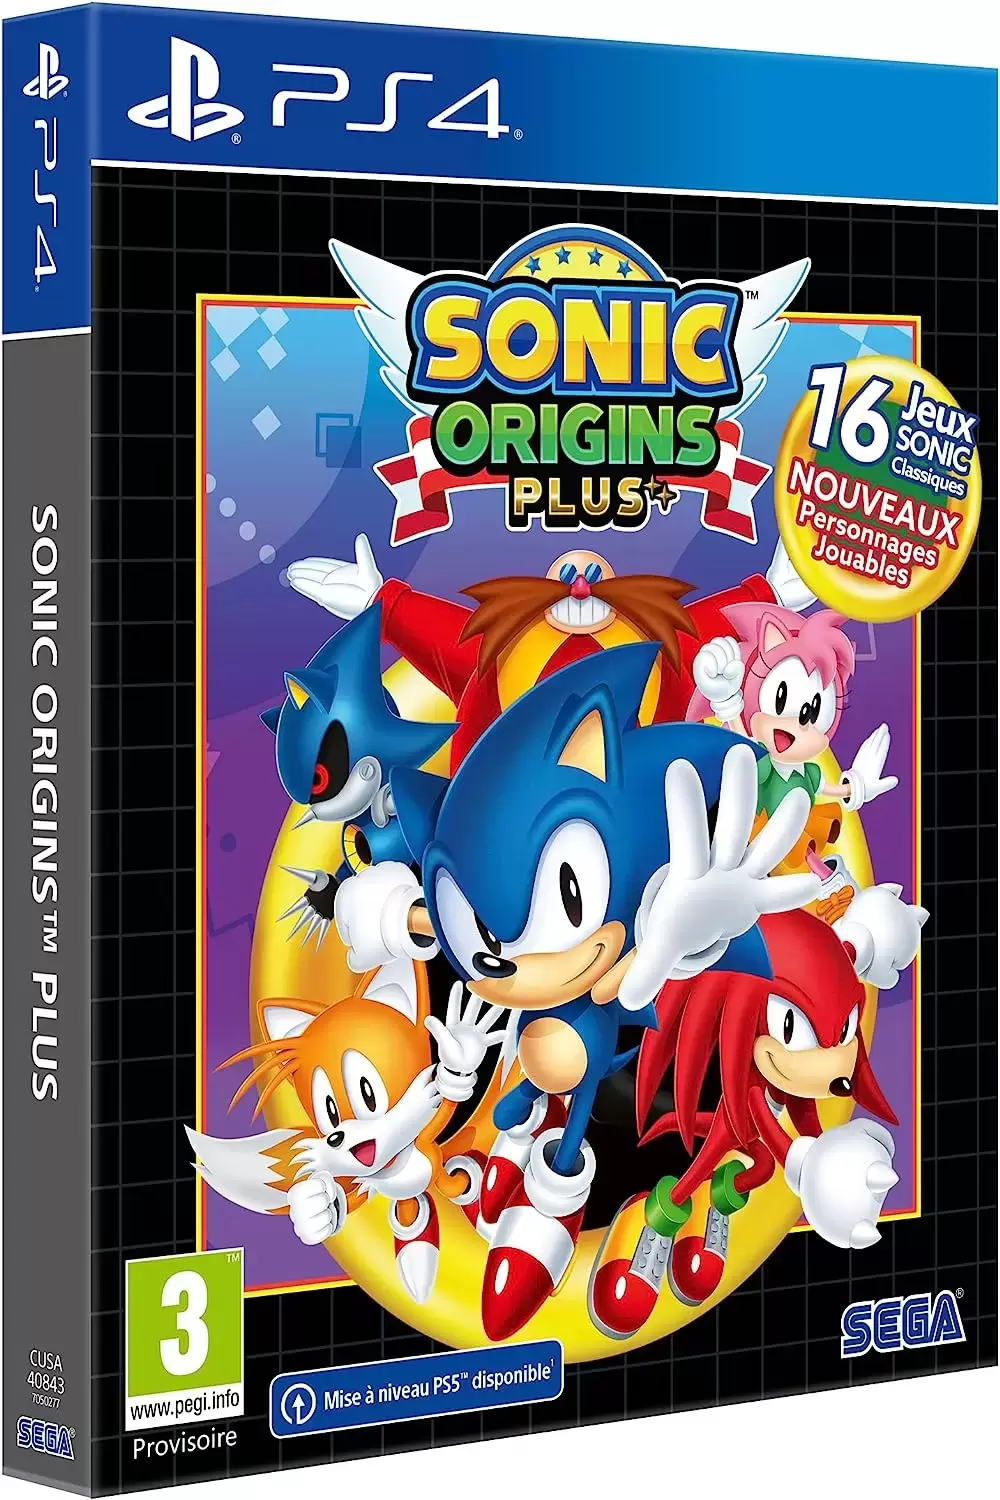 TOTAKU Sonic the Hedgehog No 10 Figure FIRST EDITION Playstation